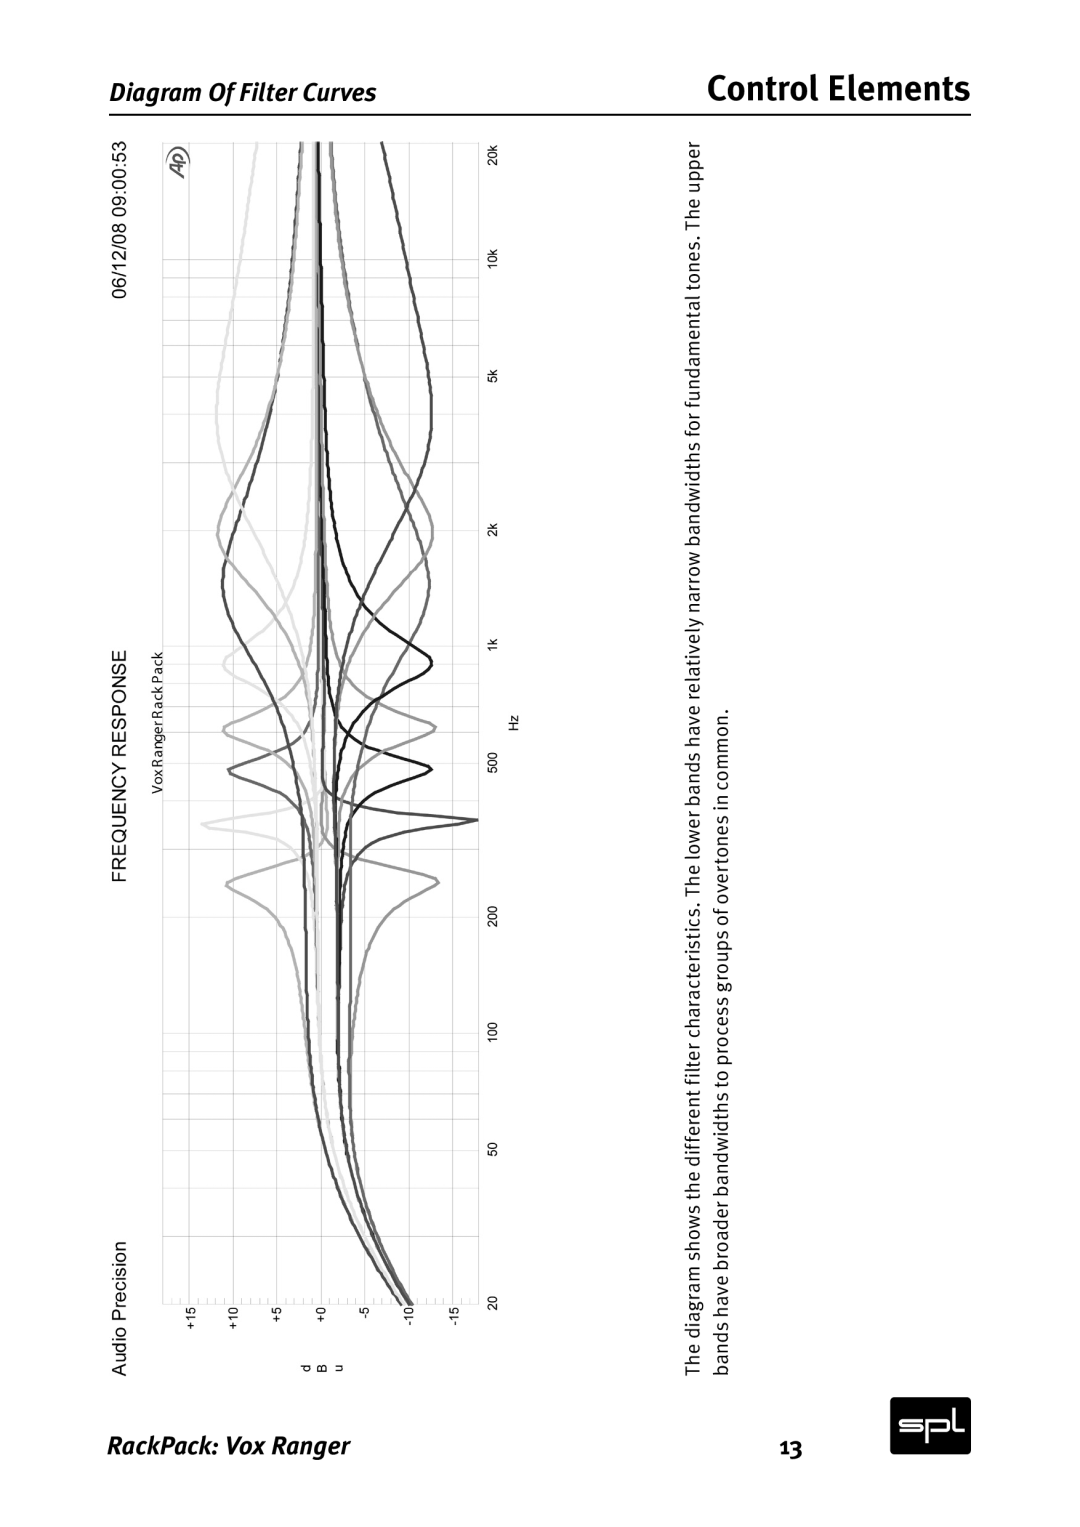 Sound Performance Lab 2718 manual Diagram Of Filter Curves, Control Elements, RackPack Vox Ranger 